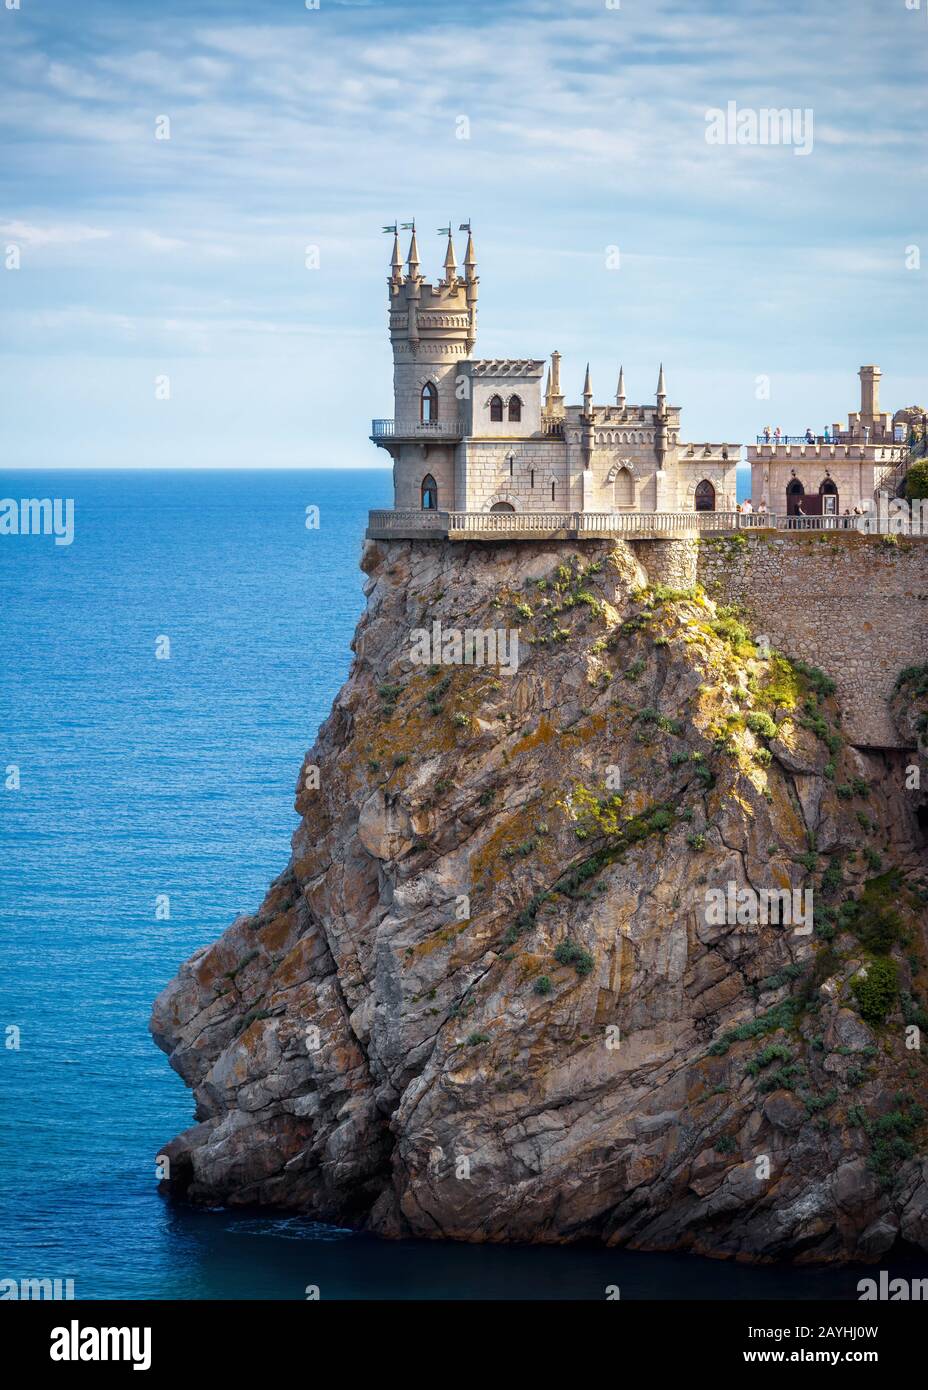 Castle Swallow's Nest on the rock in Black Sea, Crimea, Russia. It is a symbol of Crimea. Scenic view of Crimea southern coast. Crimea landmark. Stock Photo